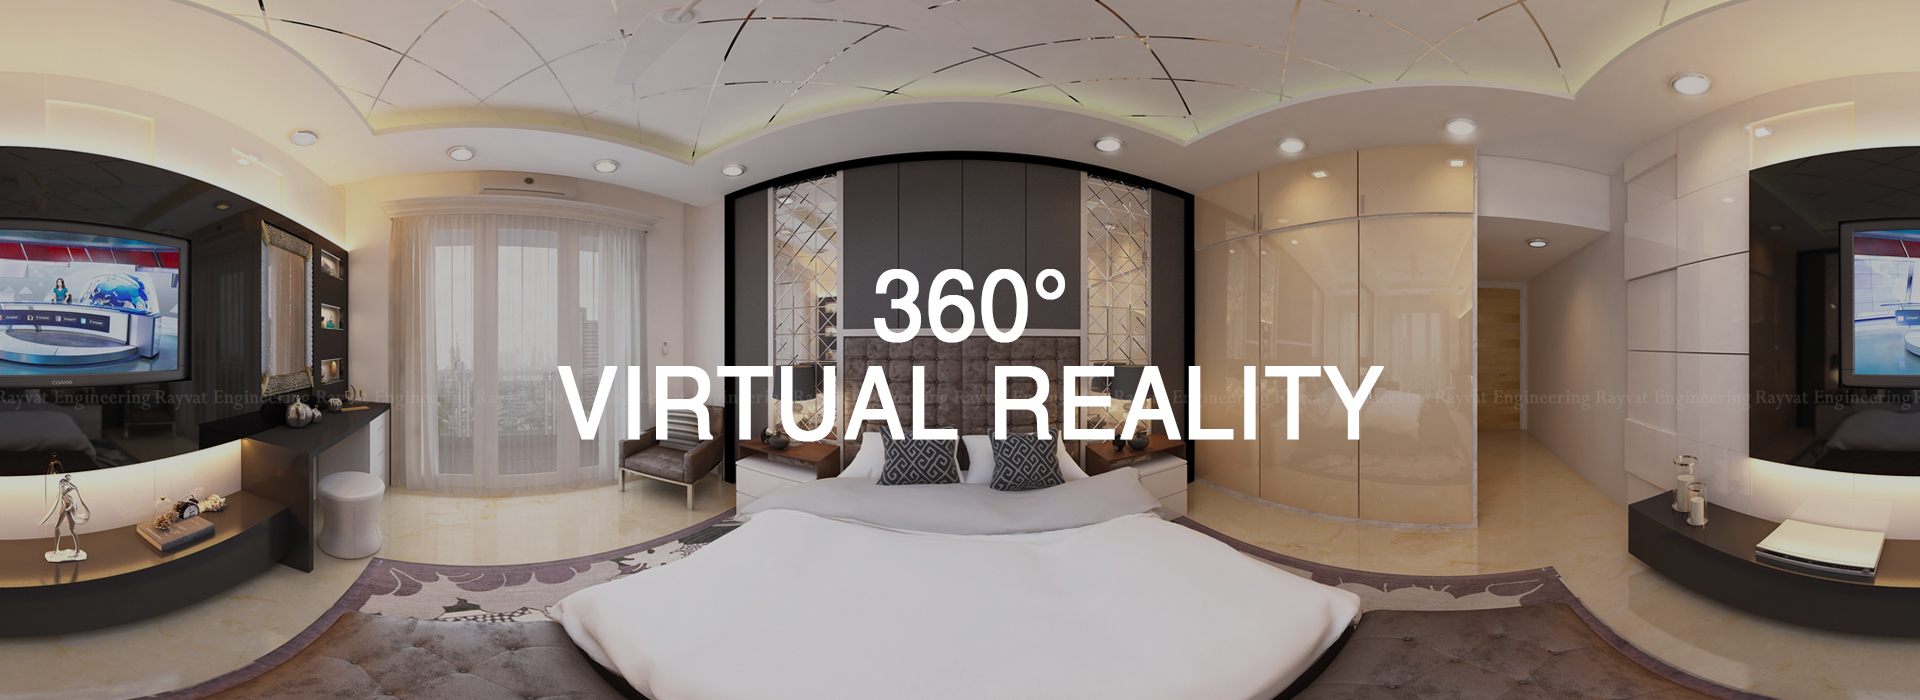 360 Virtual Reality